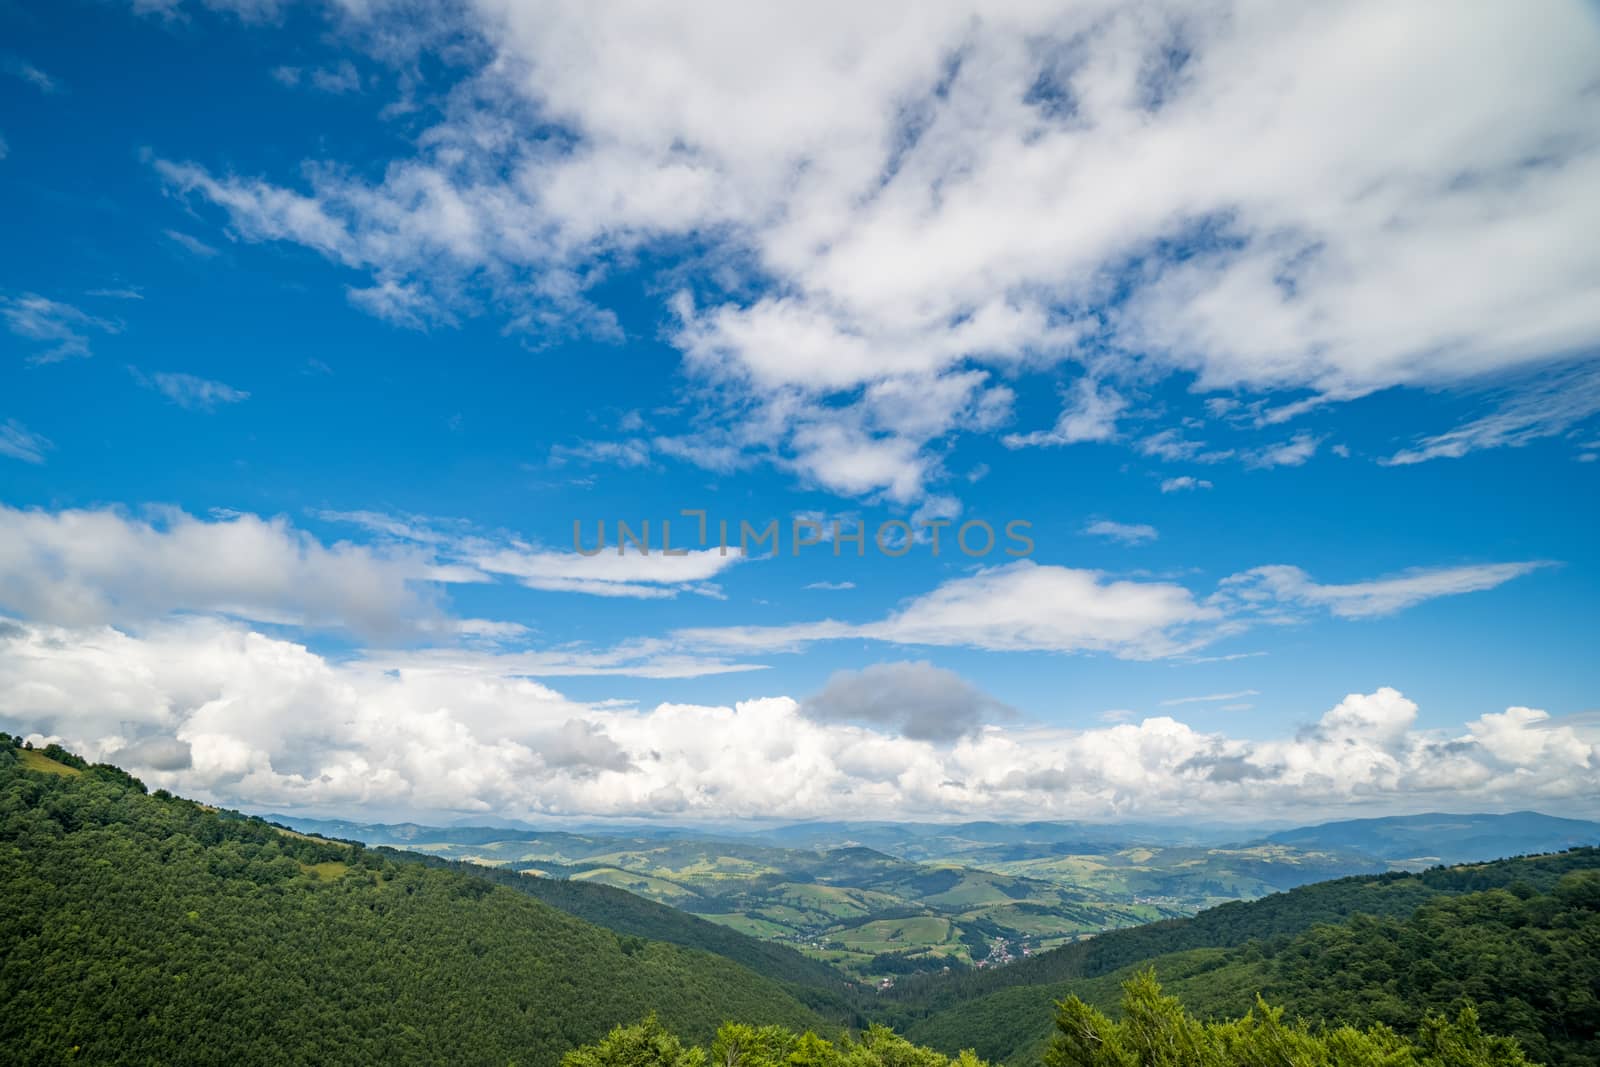 Landscape of Borzhava ridge of the Ukrainian Carpathian Mountains. Clouds above Carpathians by sergiy_romanyuk